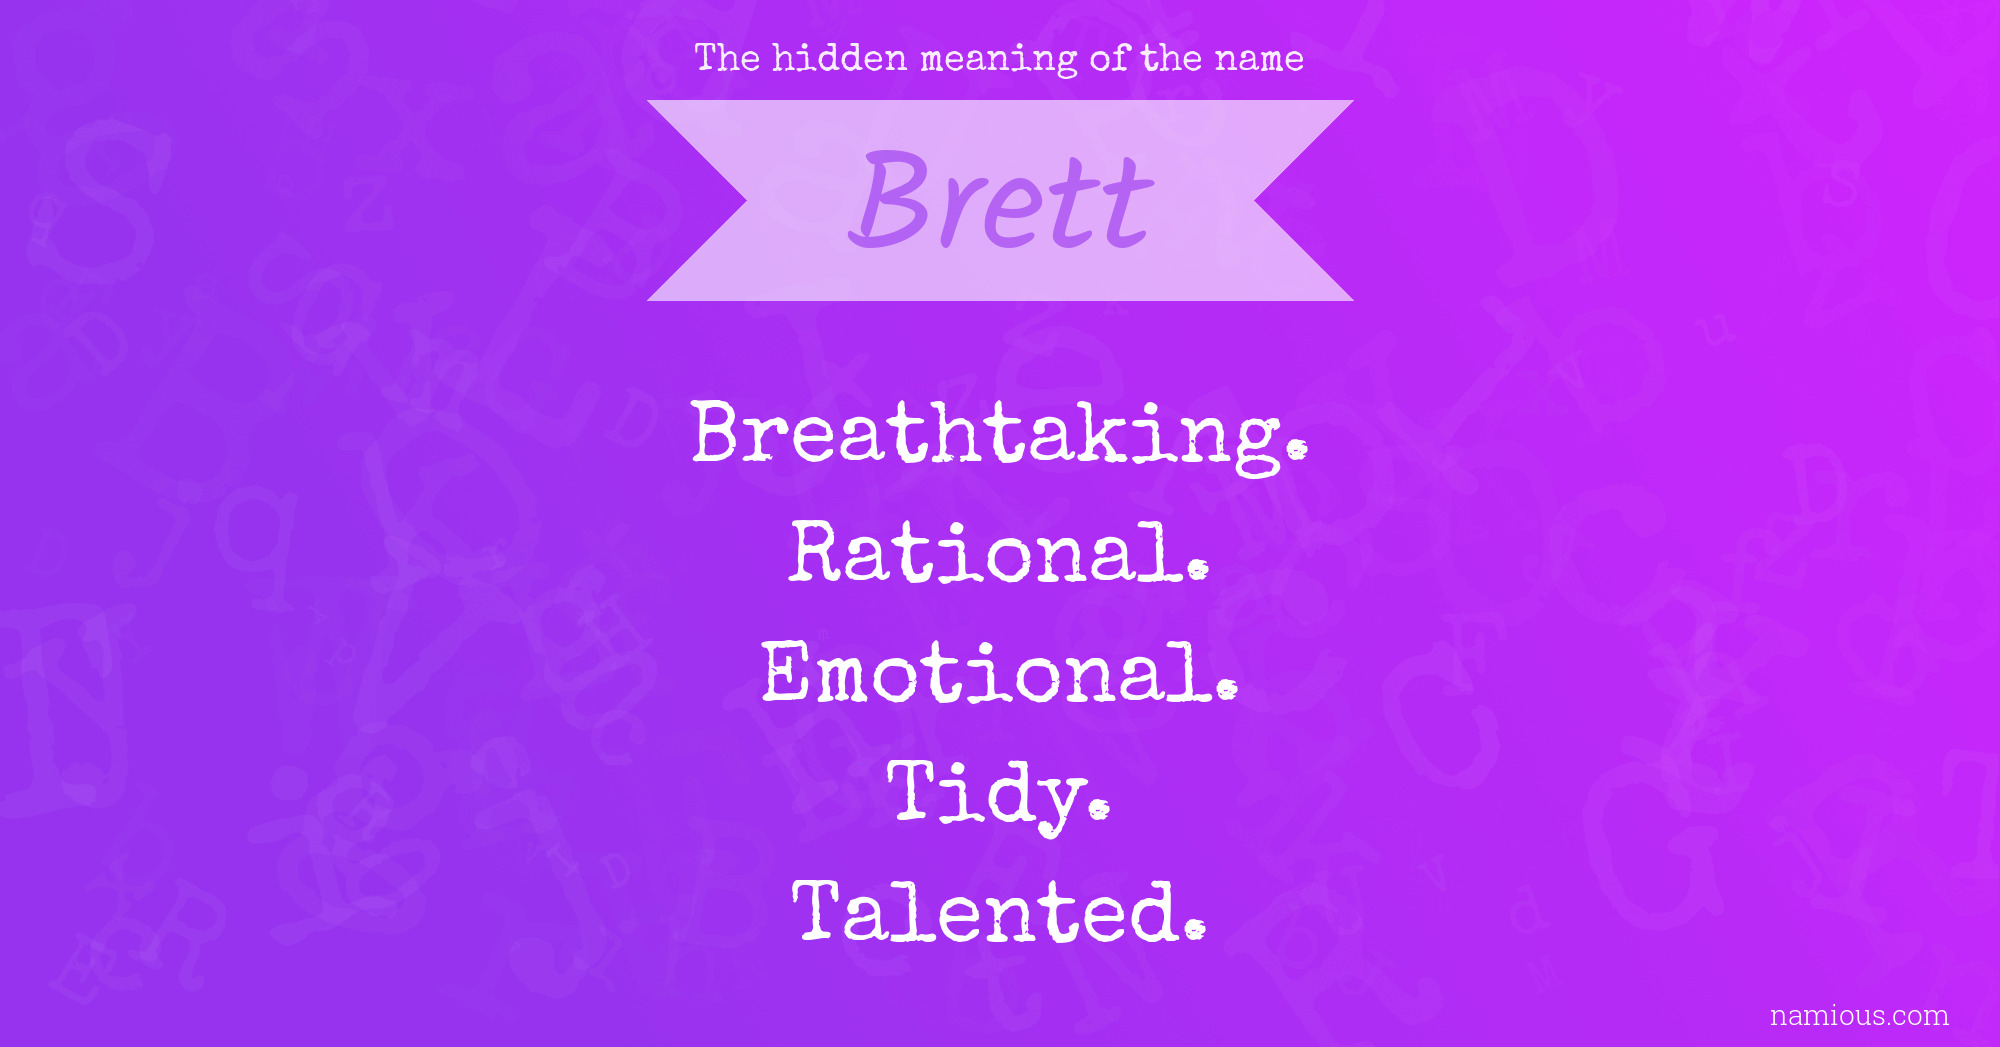 The hidden meaning of the name Brett